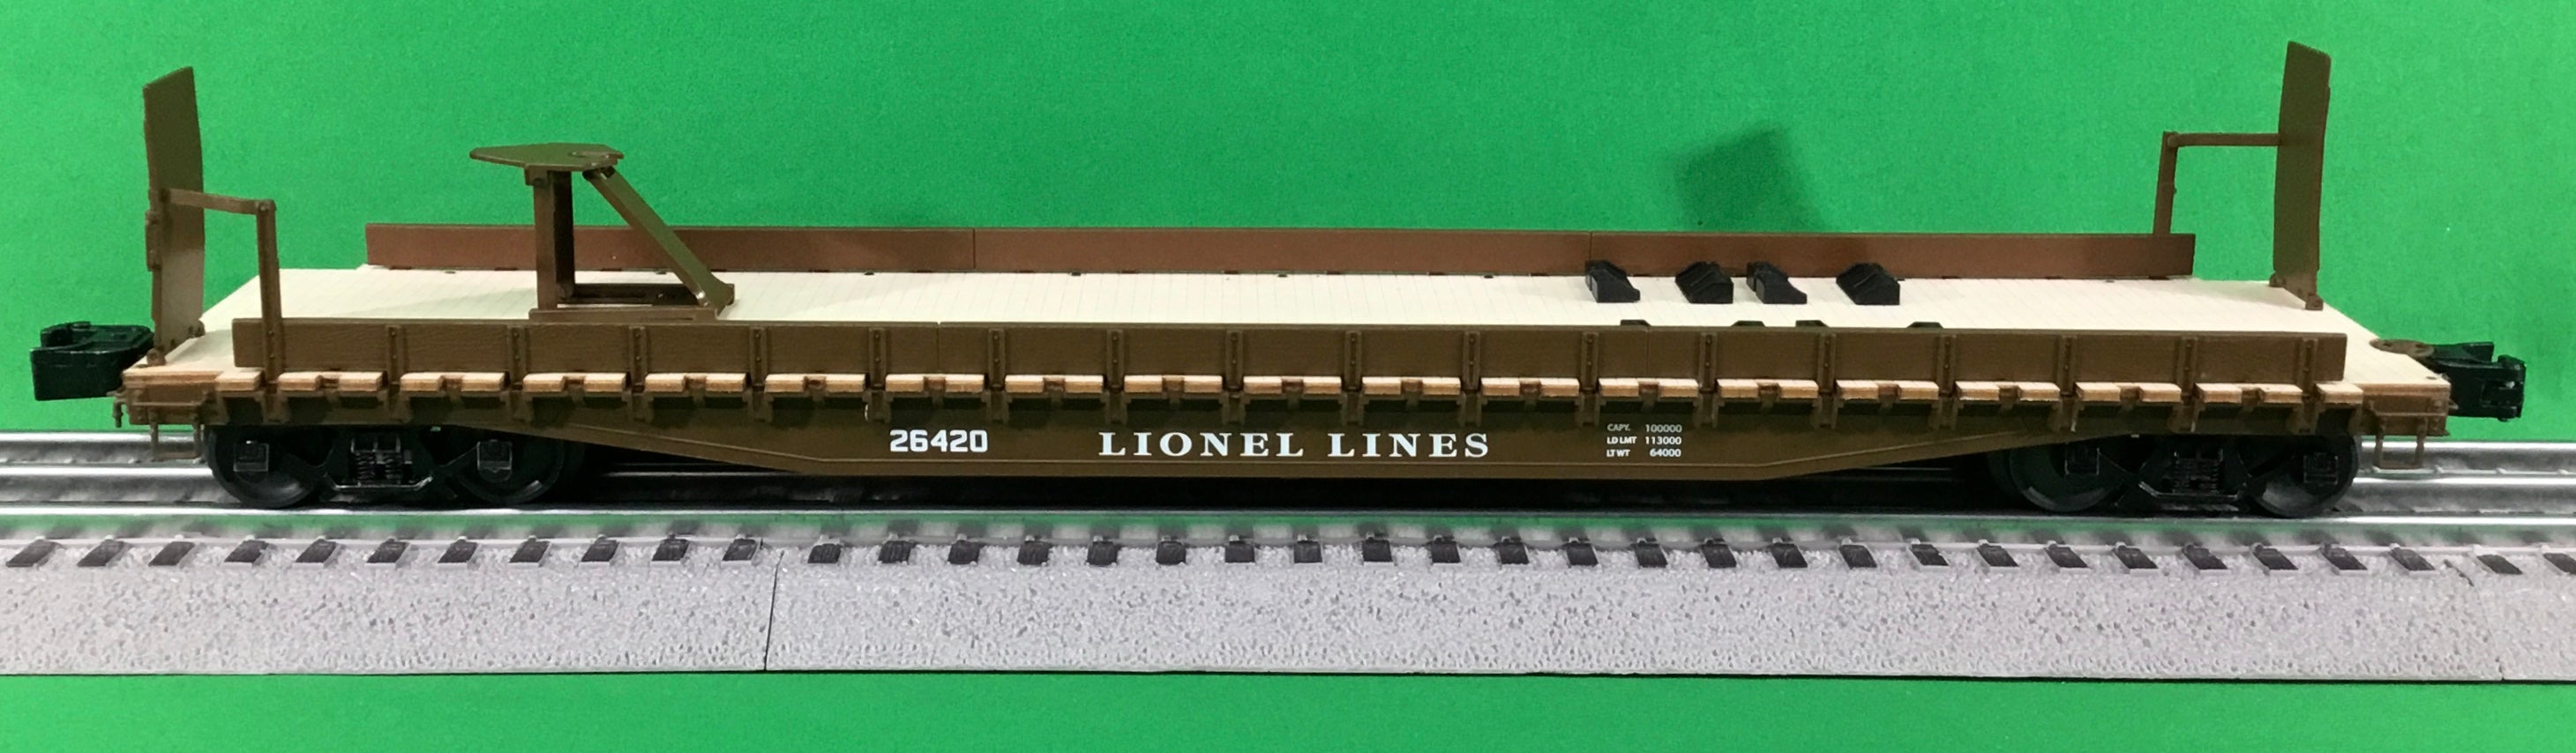 Lionel 2326420 - 50' Flatcar "Lionel Lines" w/ Lionel Play World Trailer